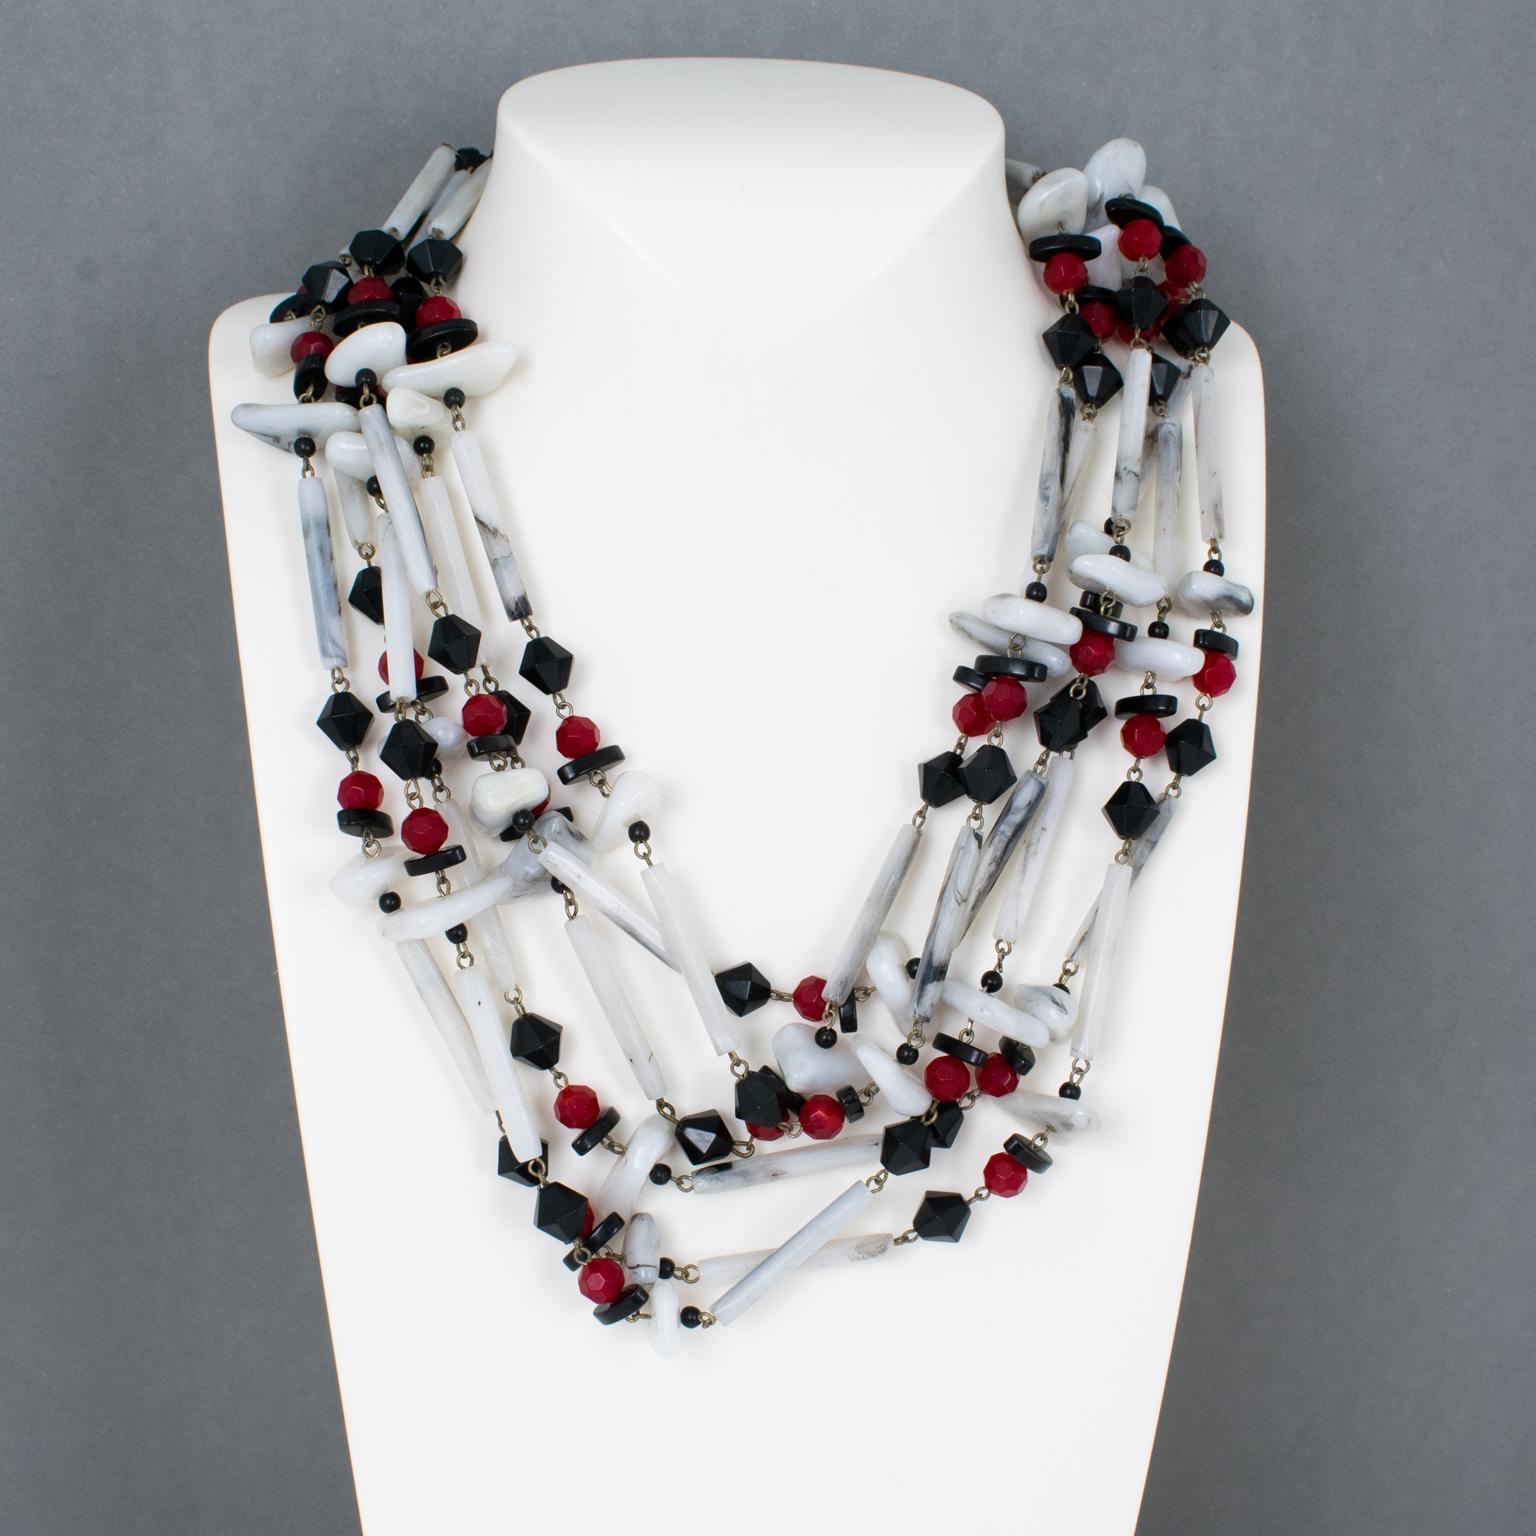 Modern Angela Caputi Multi-Strand Choker Necklace Red, White, Black Resin Pebbles